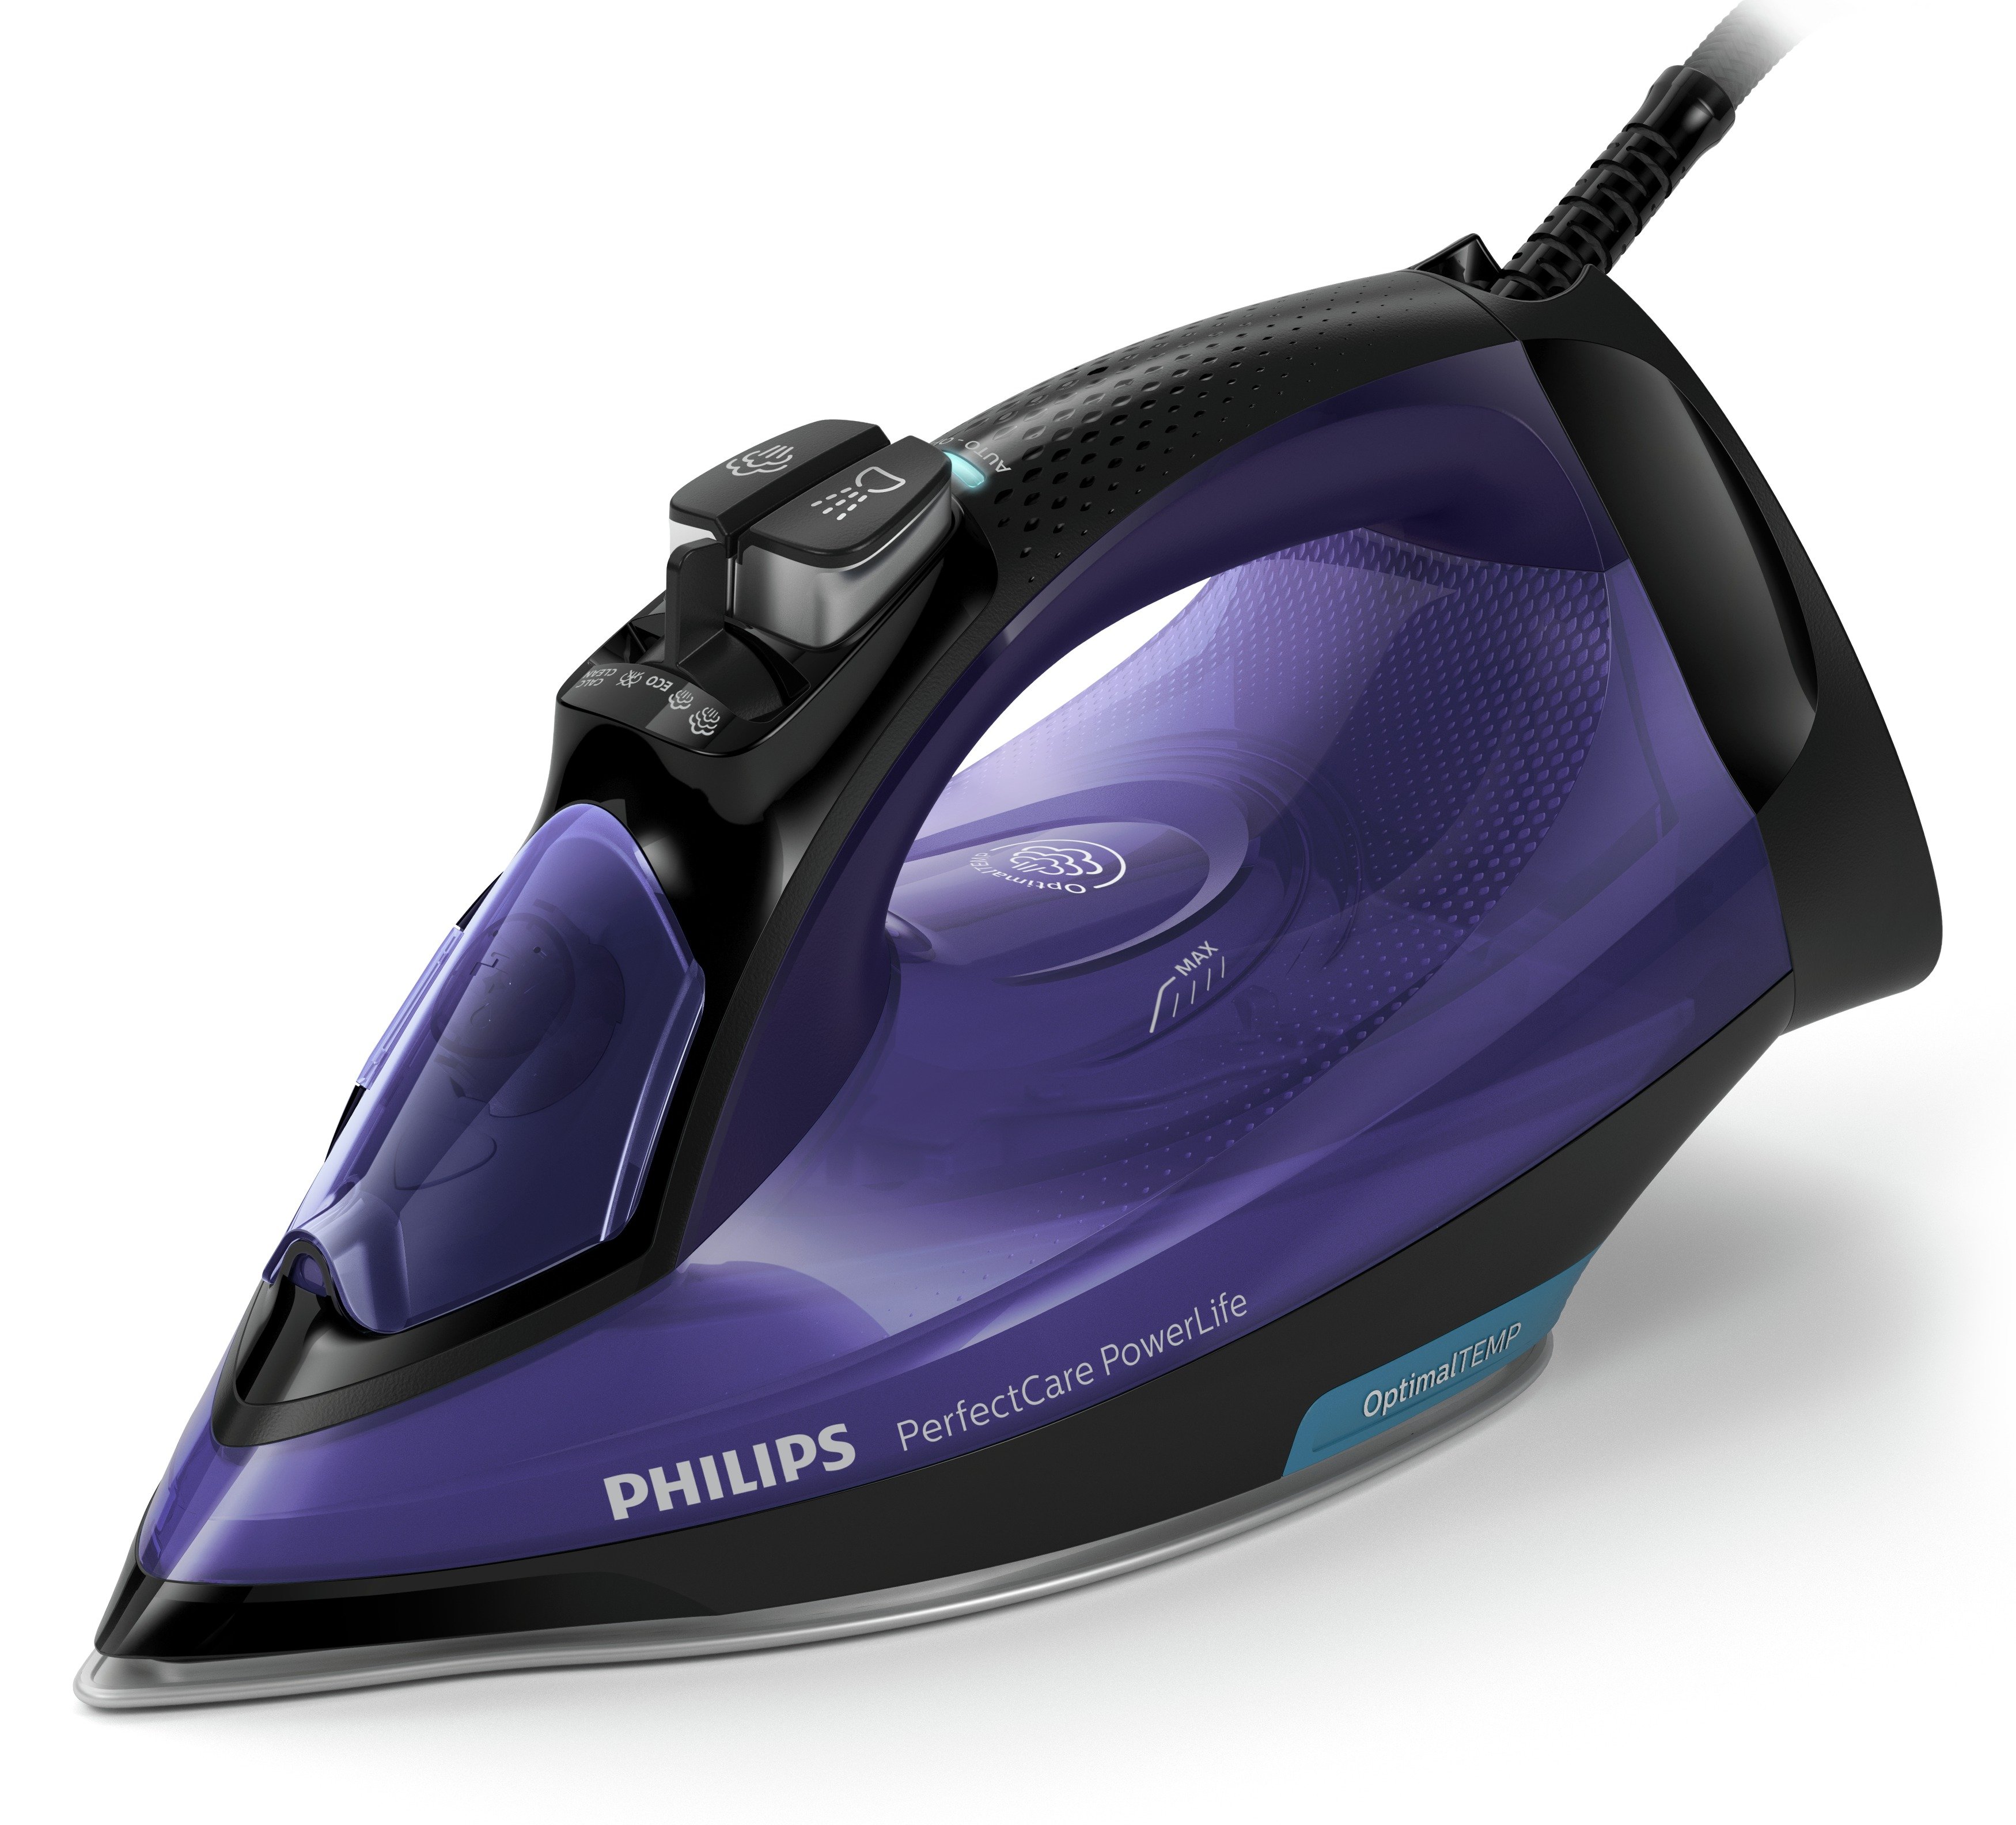 Philips Perfectcare Powerlife GC3925 Steam Iron